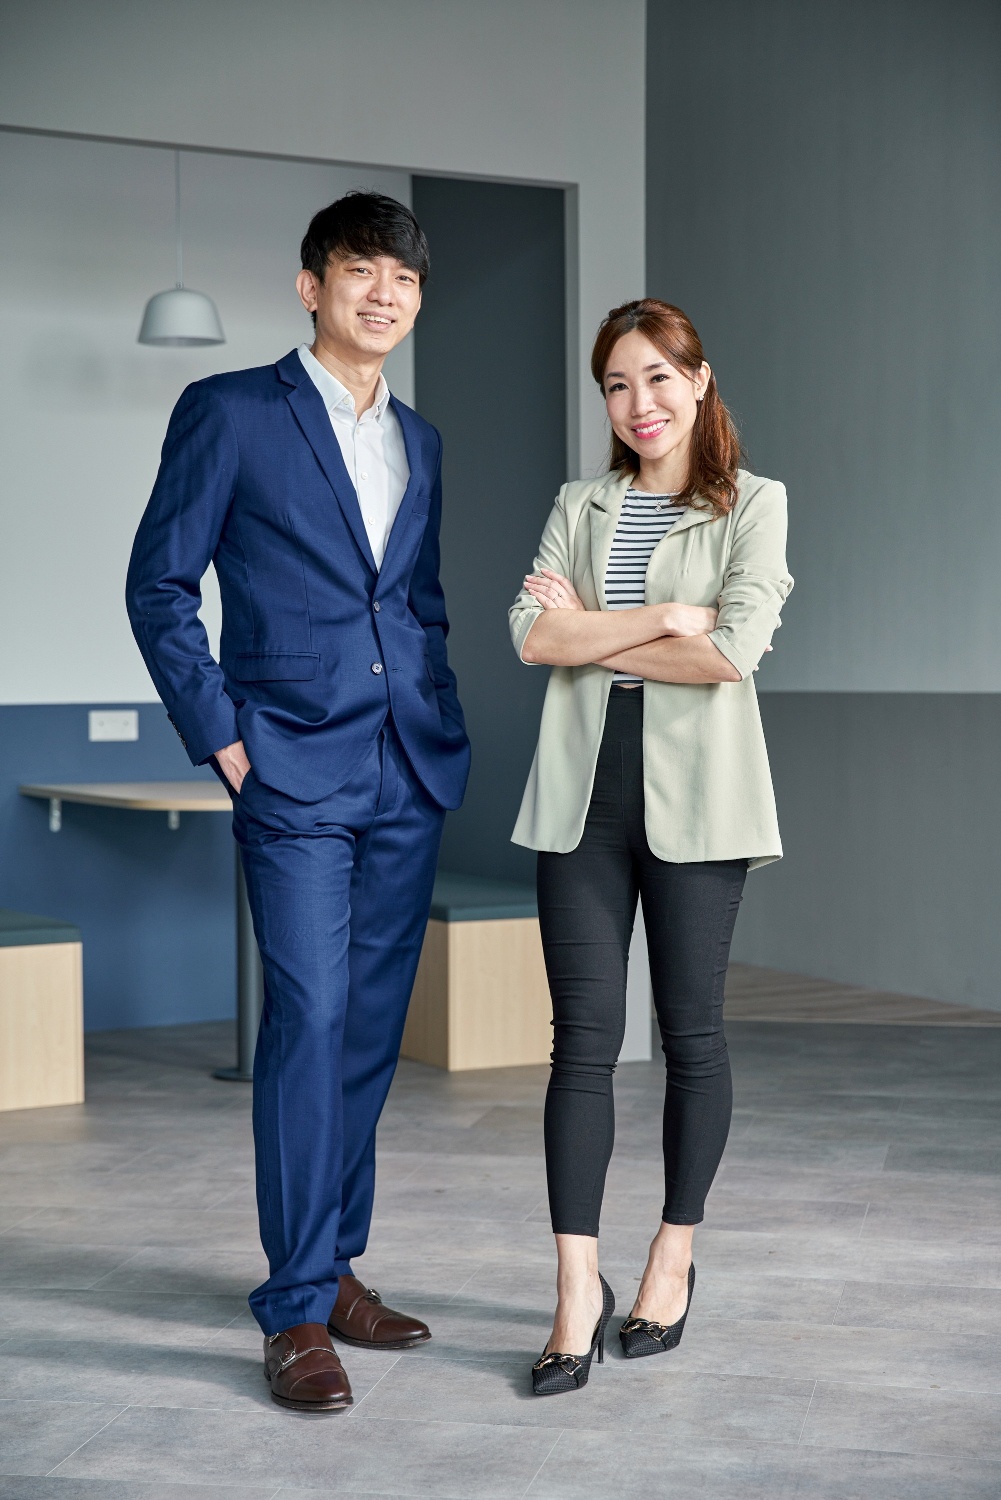 Singaporean edtech startup Geniebook raises $16.6 million in Series A funding round